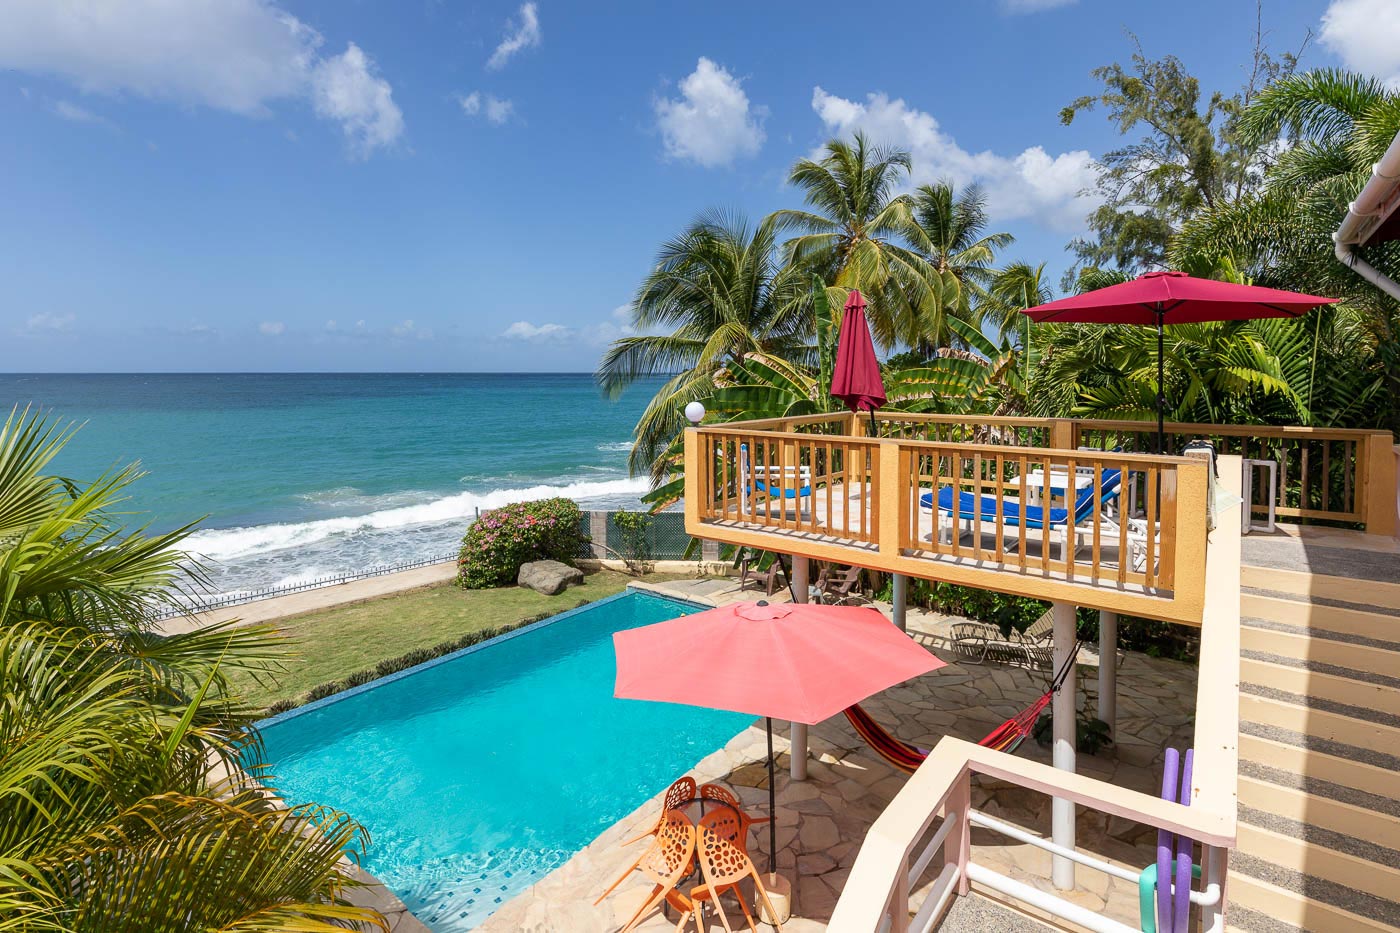 Birdie's Nest, Tobago - spacious comfortable holiday accommodation